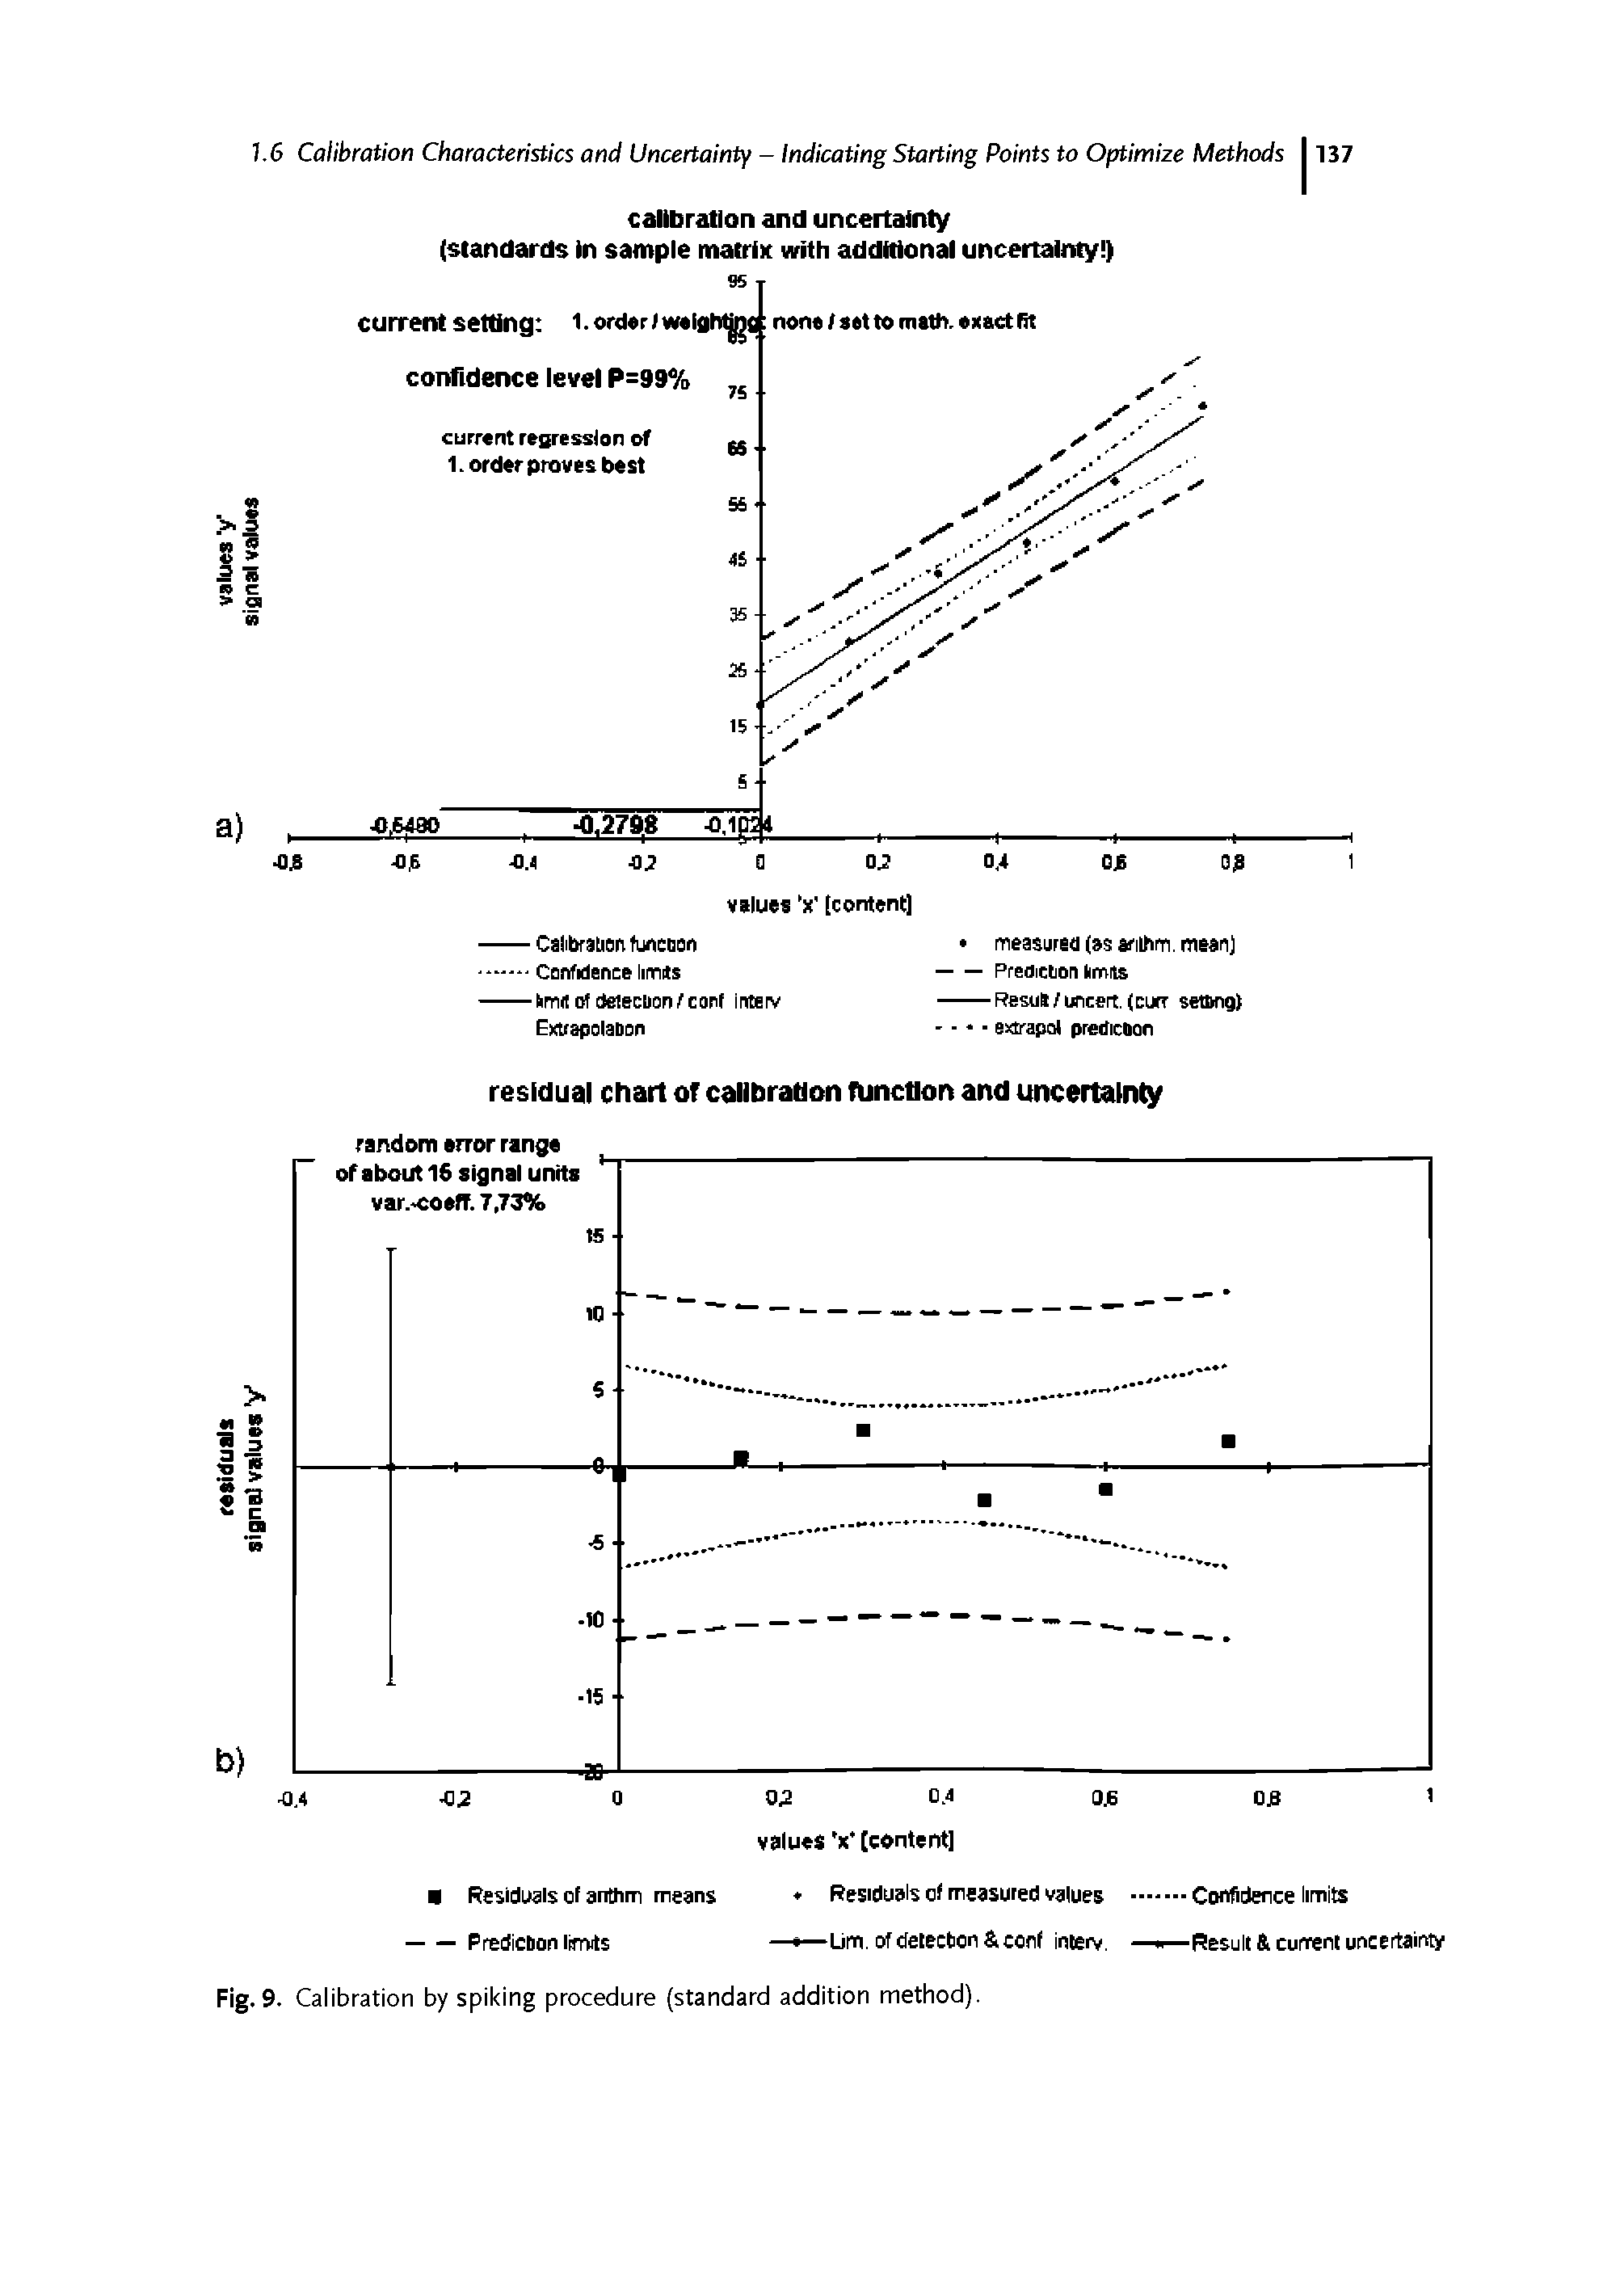 Fig. 9. Calibration by spiking procedure (standard addition method).